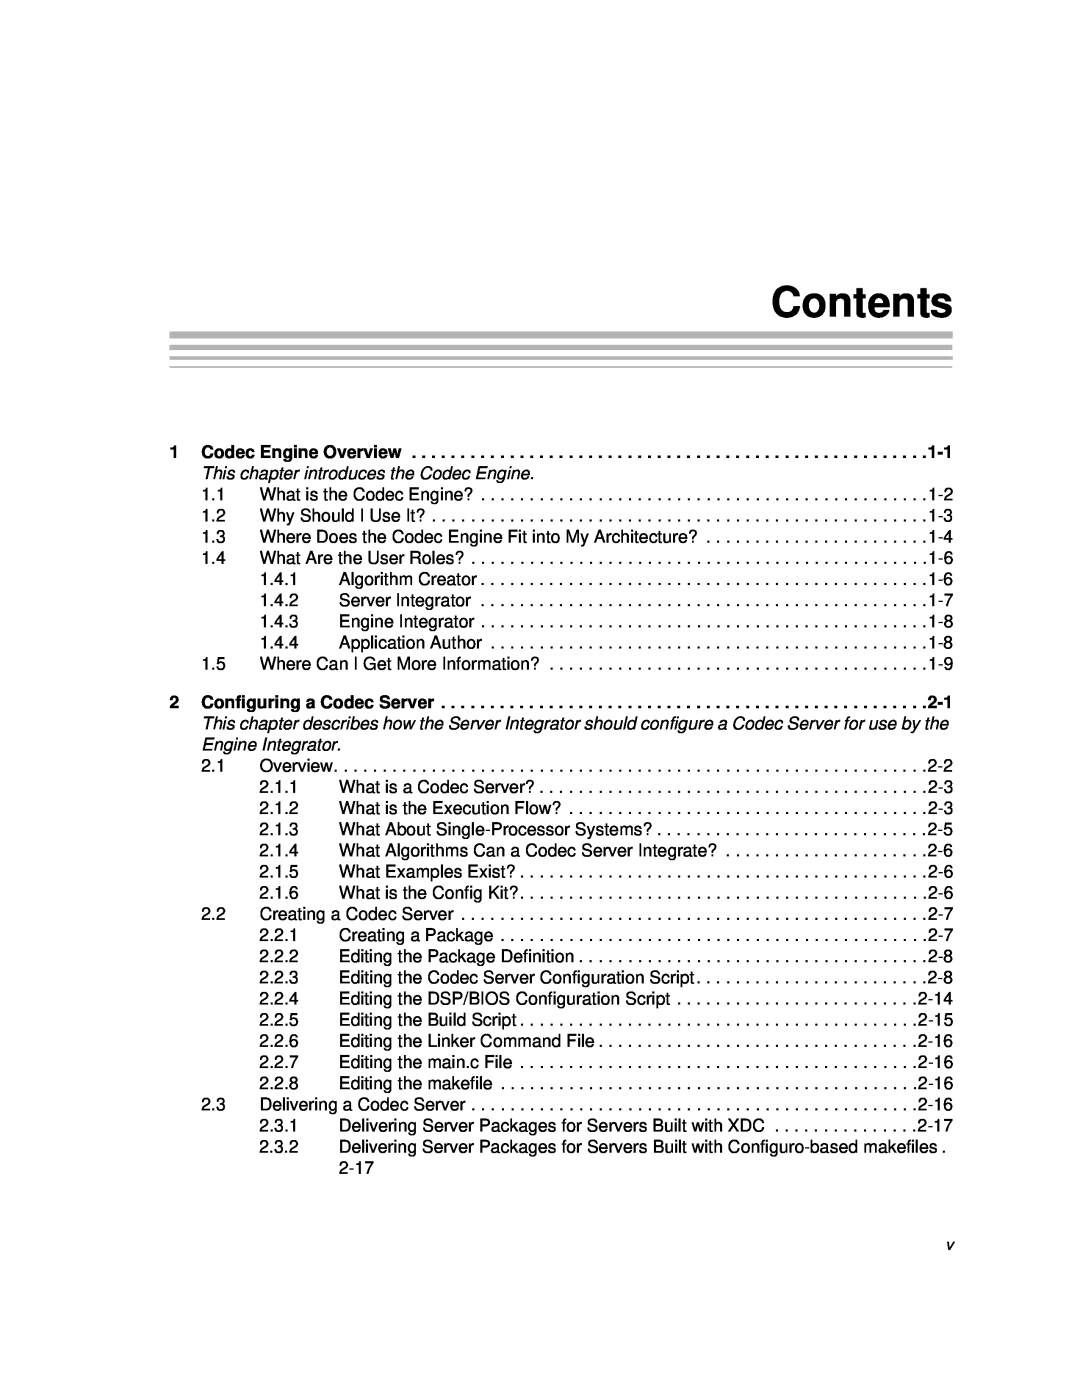 Texas Instruments Codec Engine Server manual Contents, Codec Engine Overview 